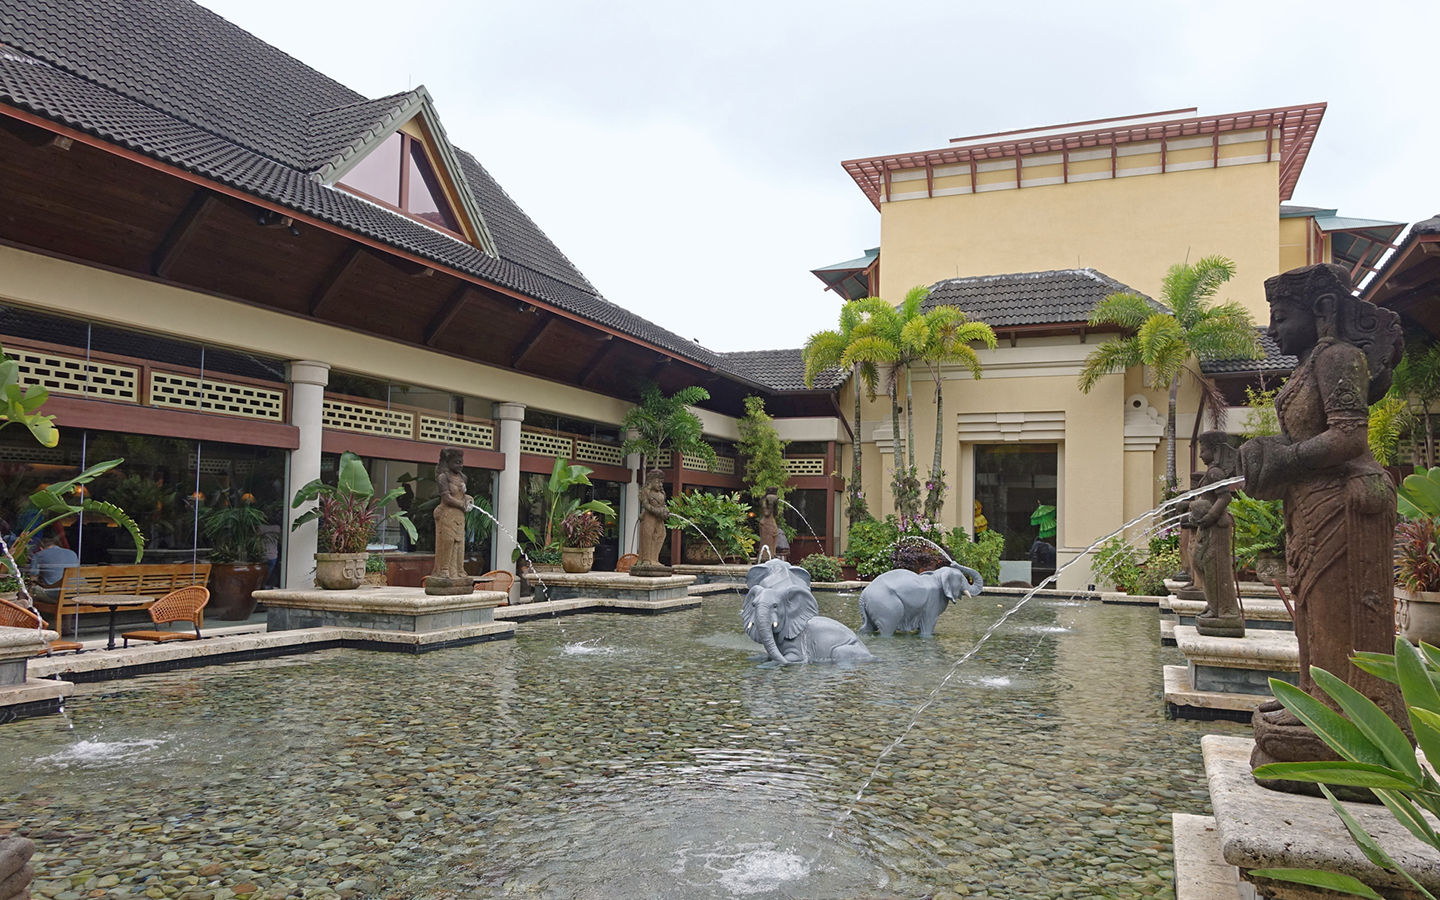 On-Site Hotels at Universal Orlando Resort